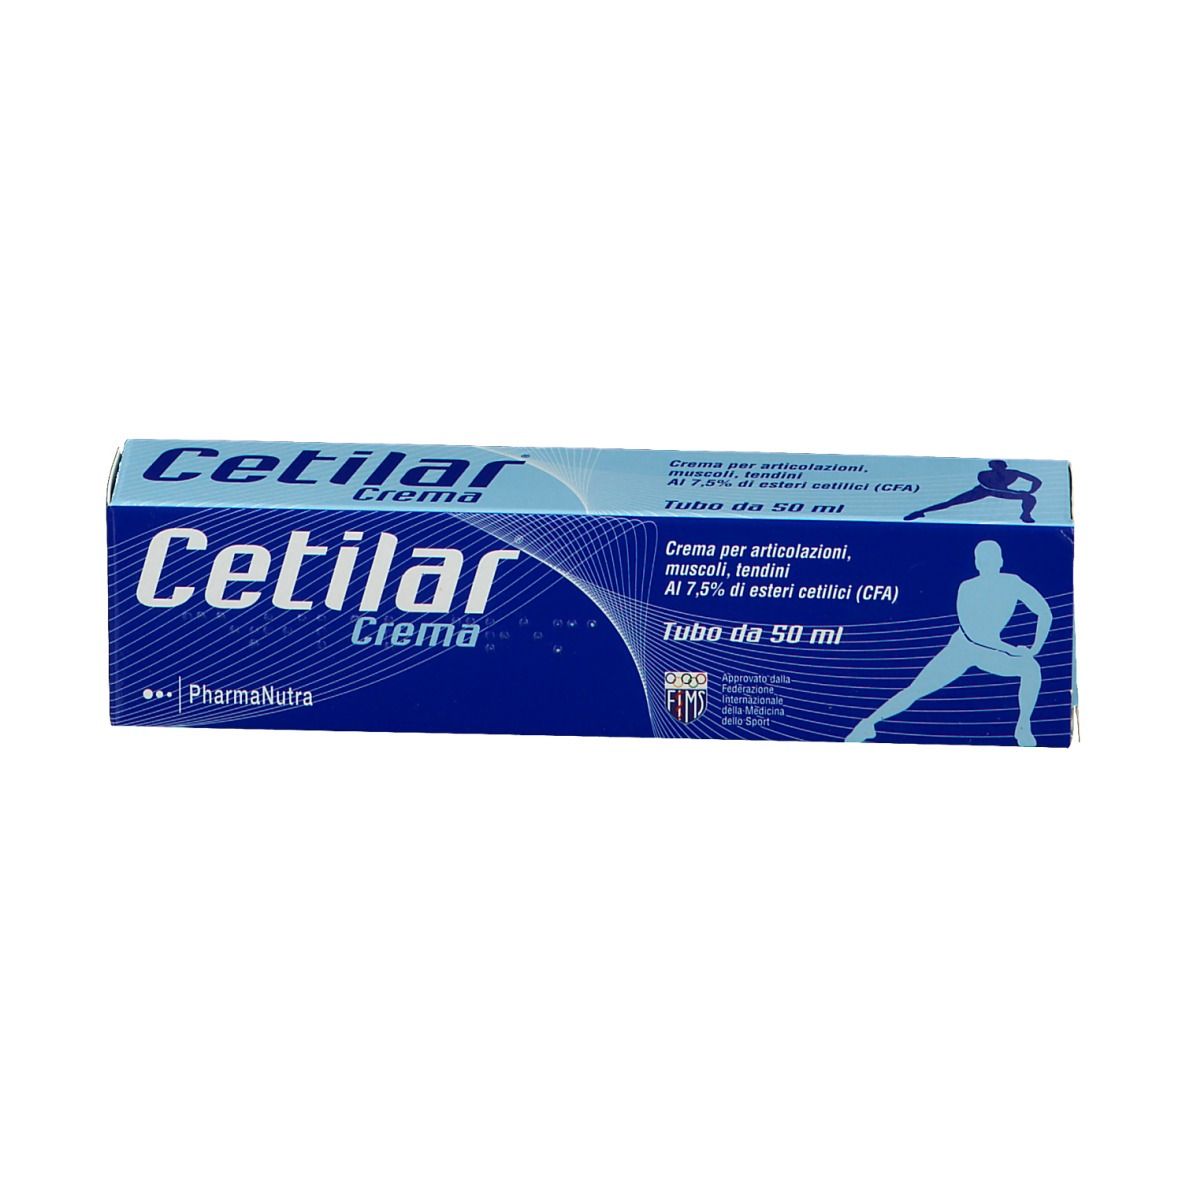 Cetilar® Crema - Cream in a 50 mL tube - Cetilar®